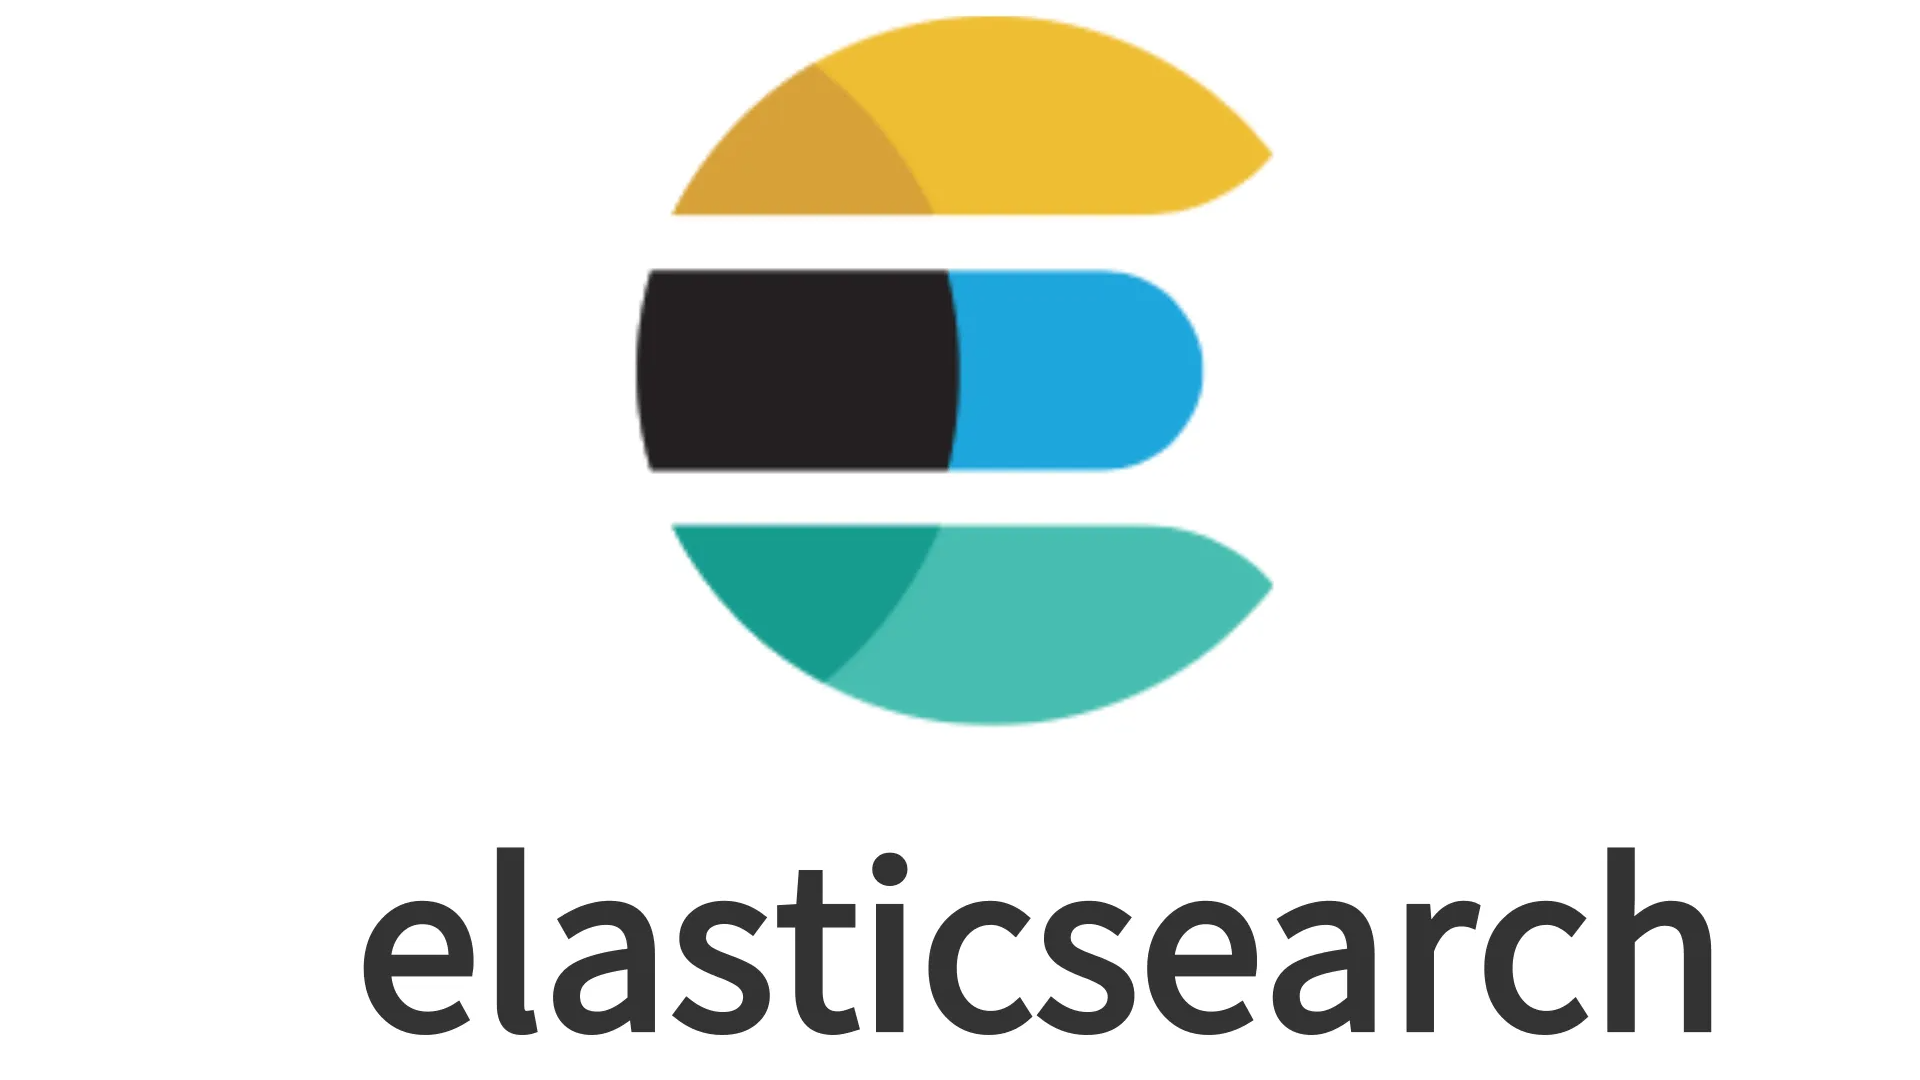 Elasticsearch全文检索引擎复习笔记